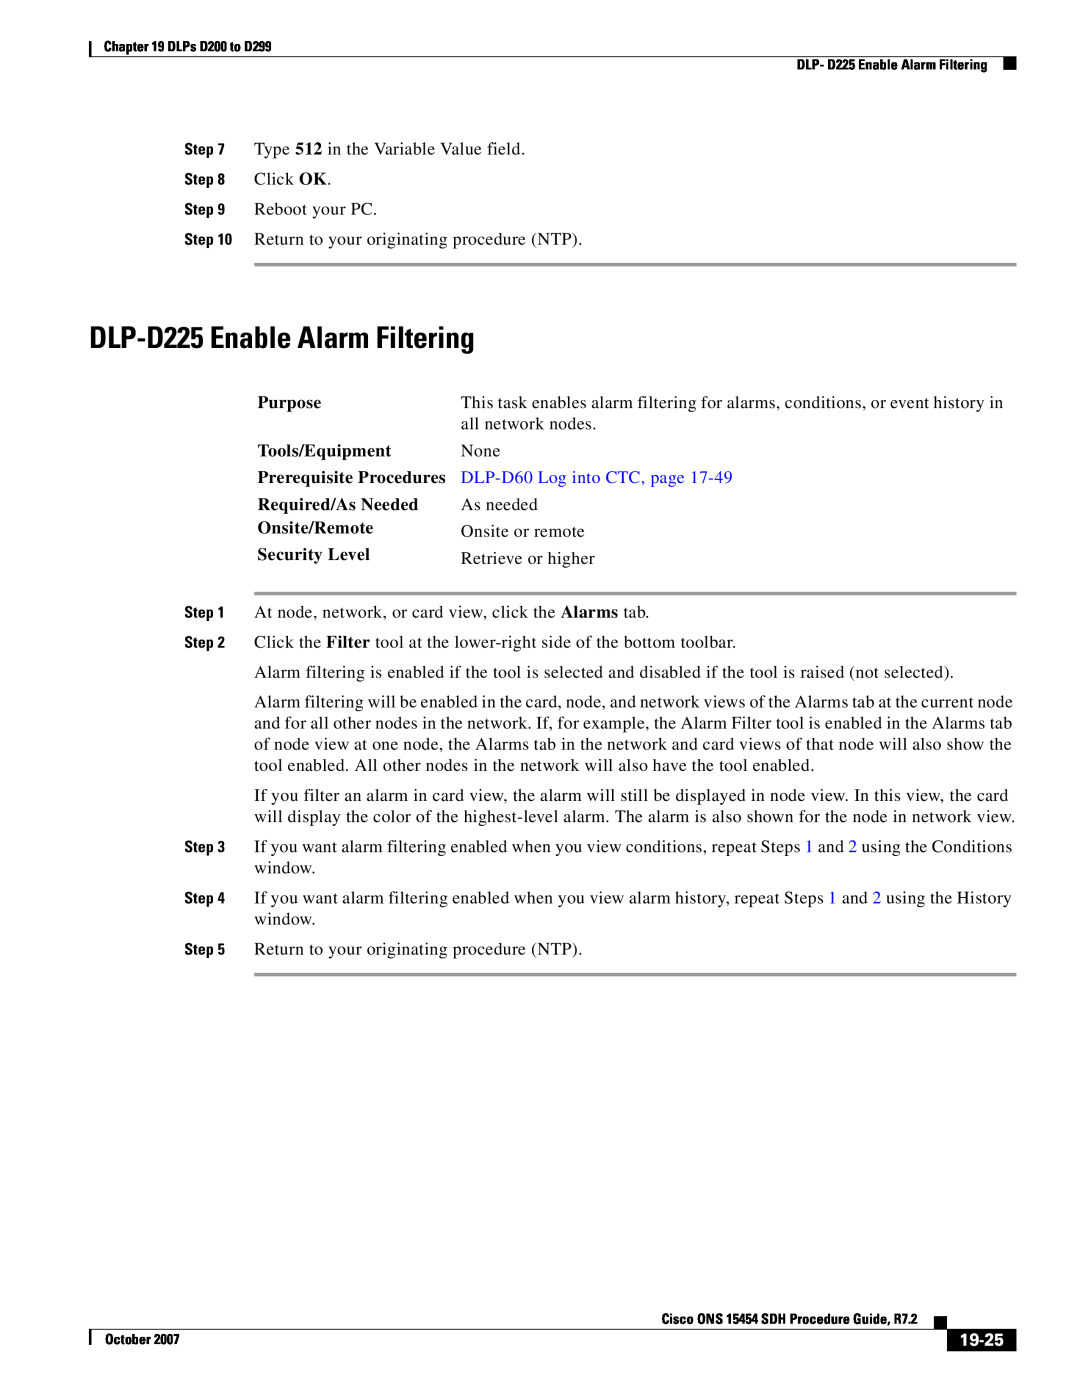 Cisco Systems D200 manual DLP-D225 Enable Alarm Filtering, DLP-D60 Log into CTC, page, 19-25 